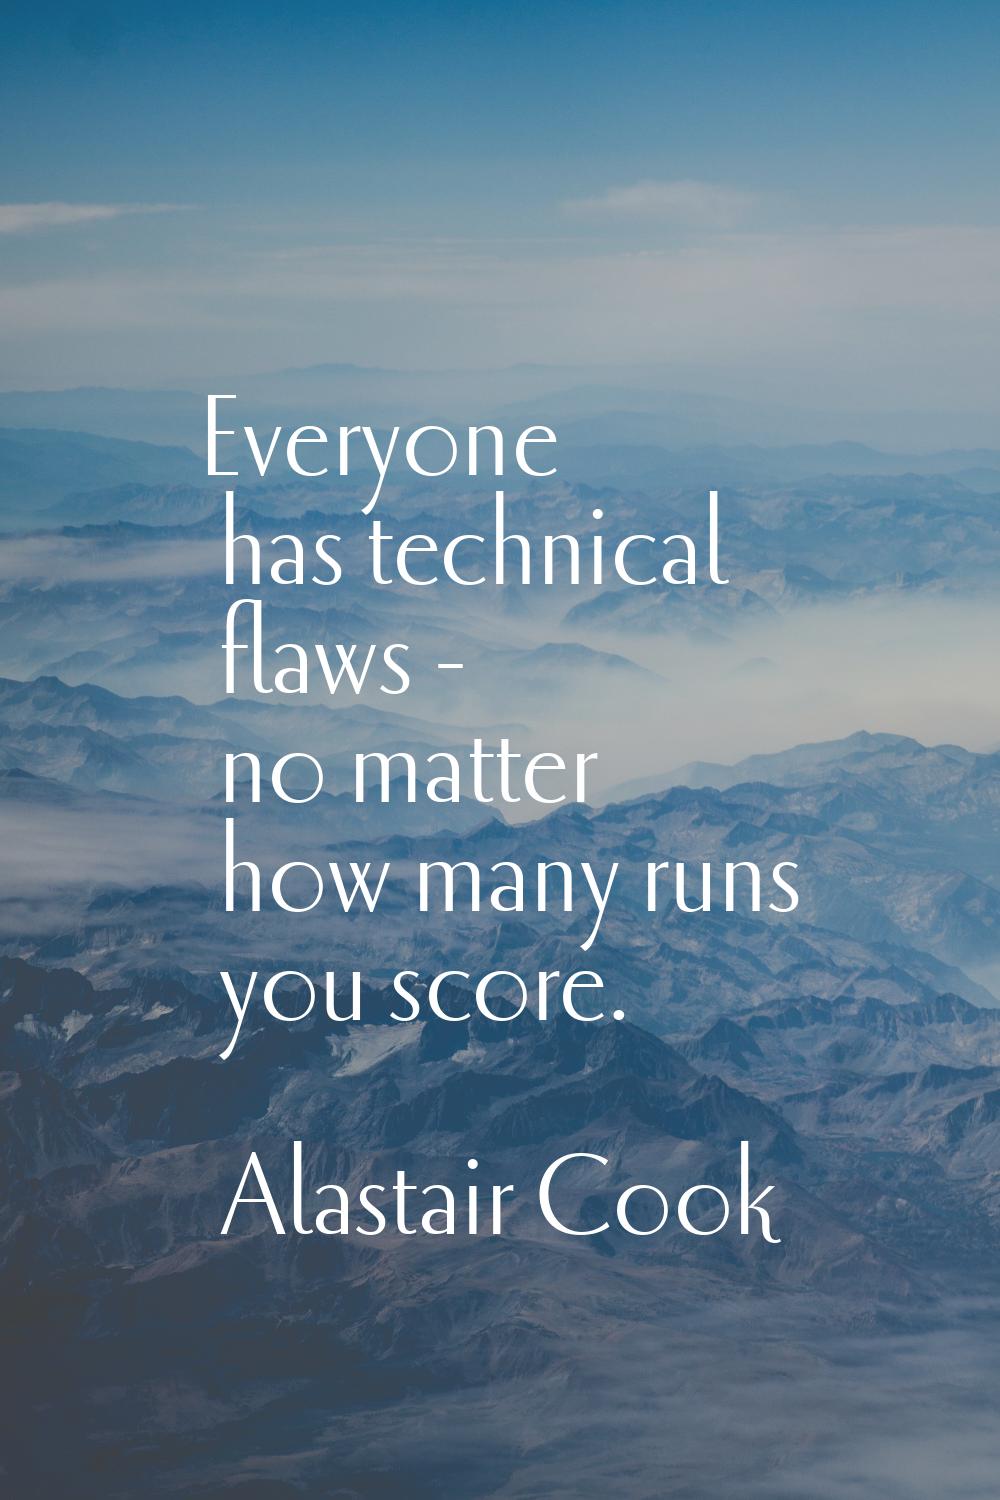 Everyone has technical flaws - no matter how many runs you score.